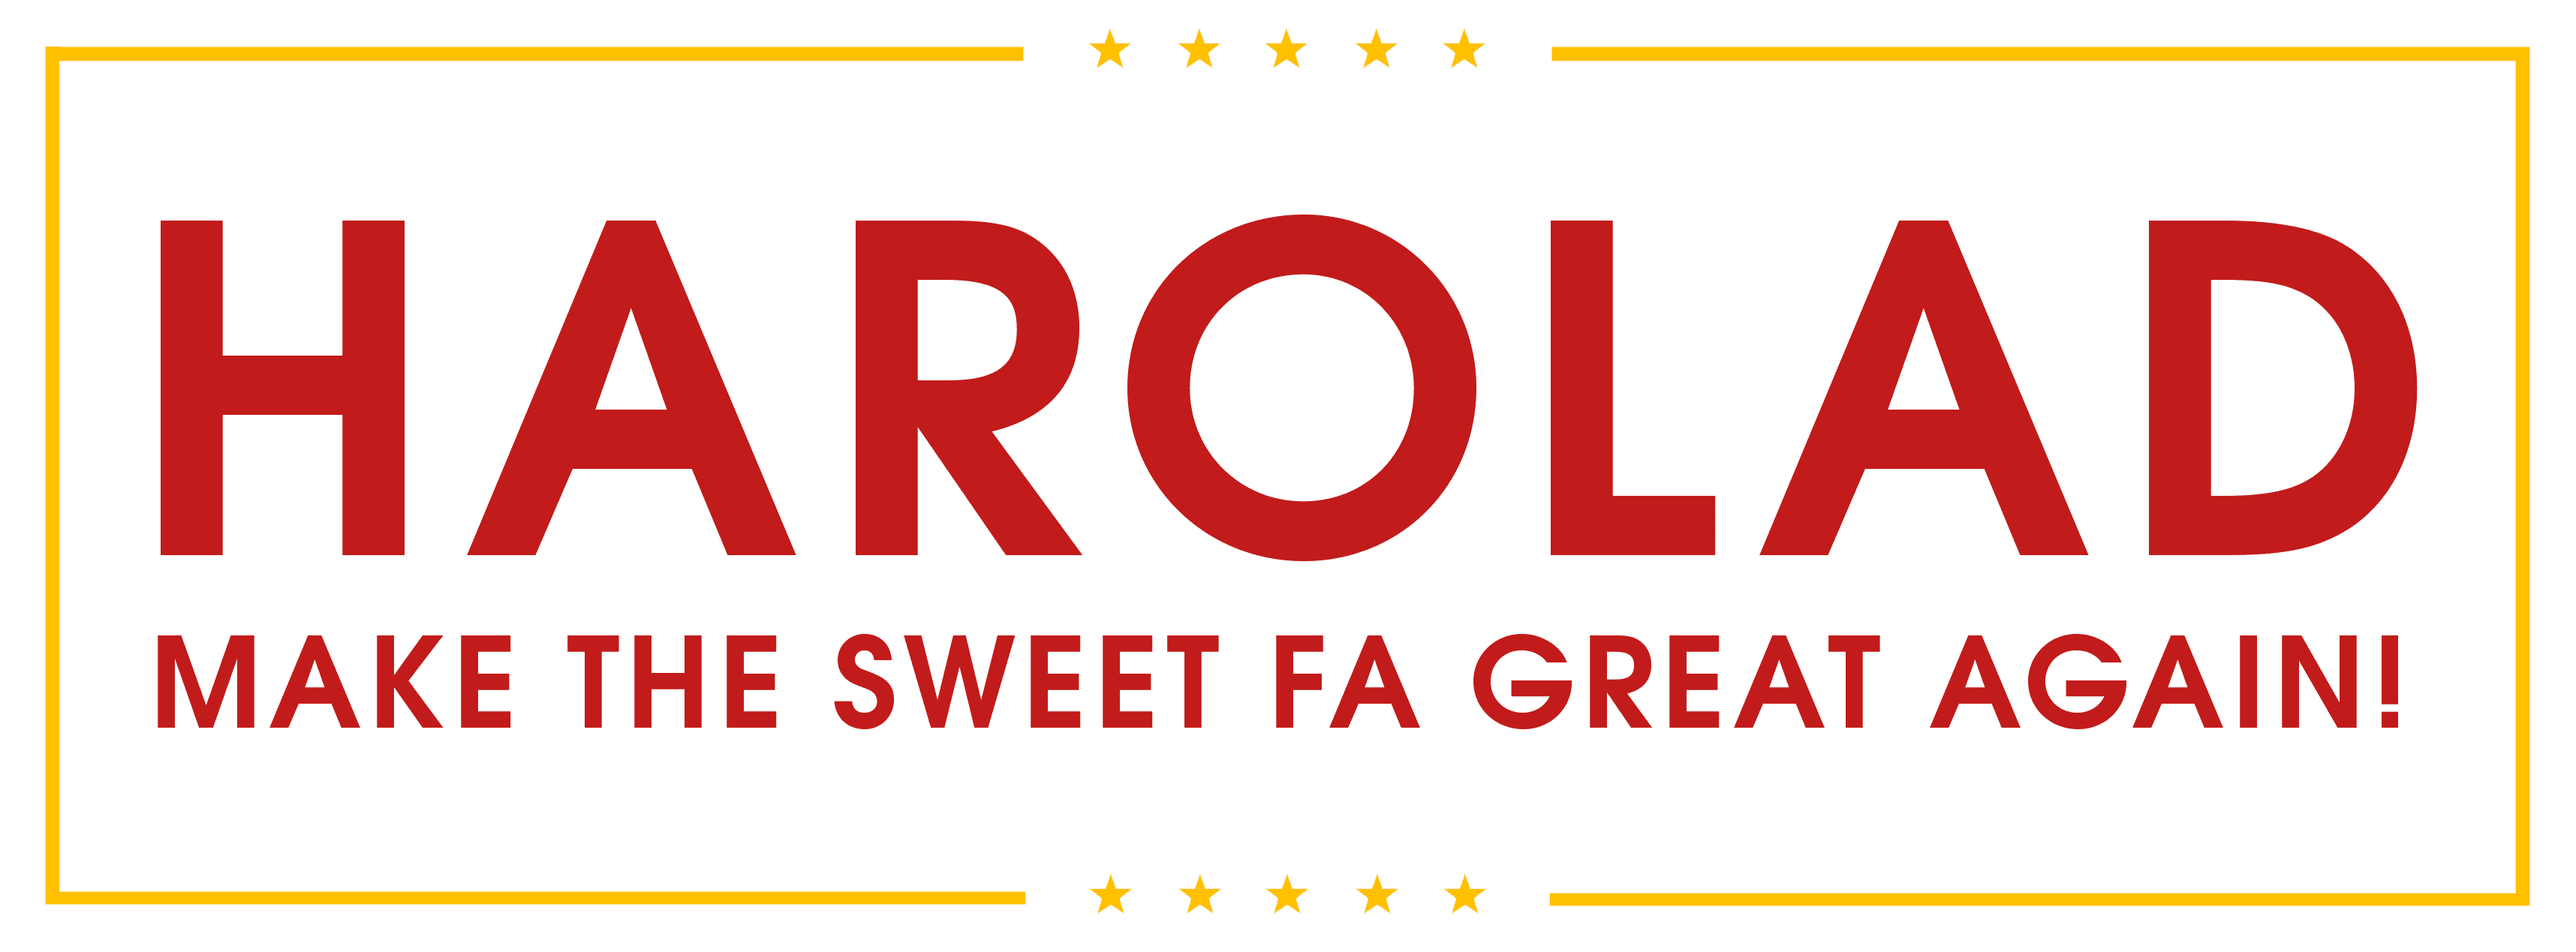 Make the Sweet FA Great Again Logo